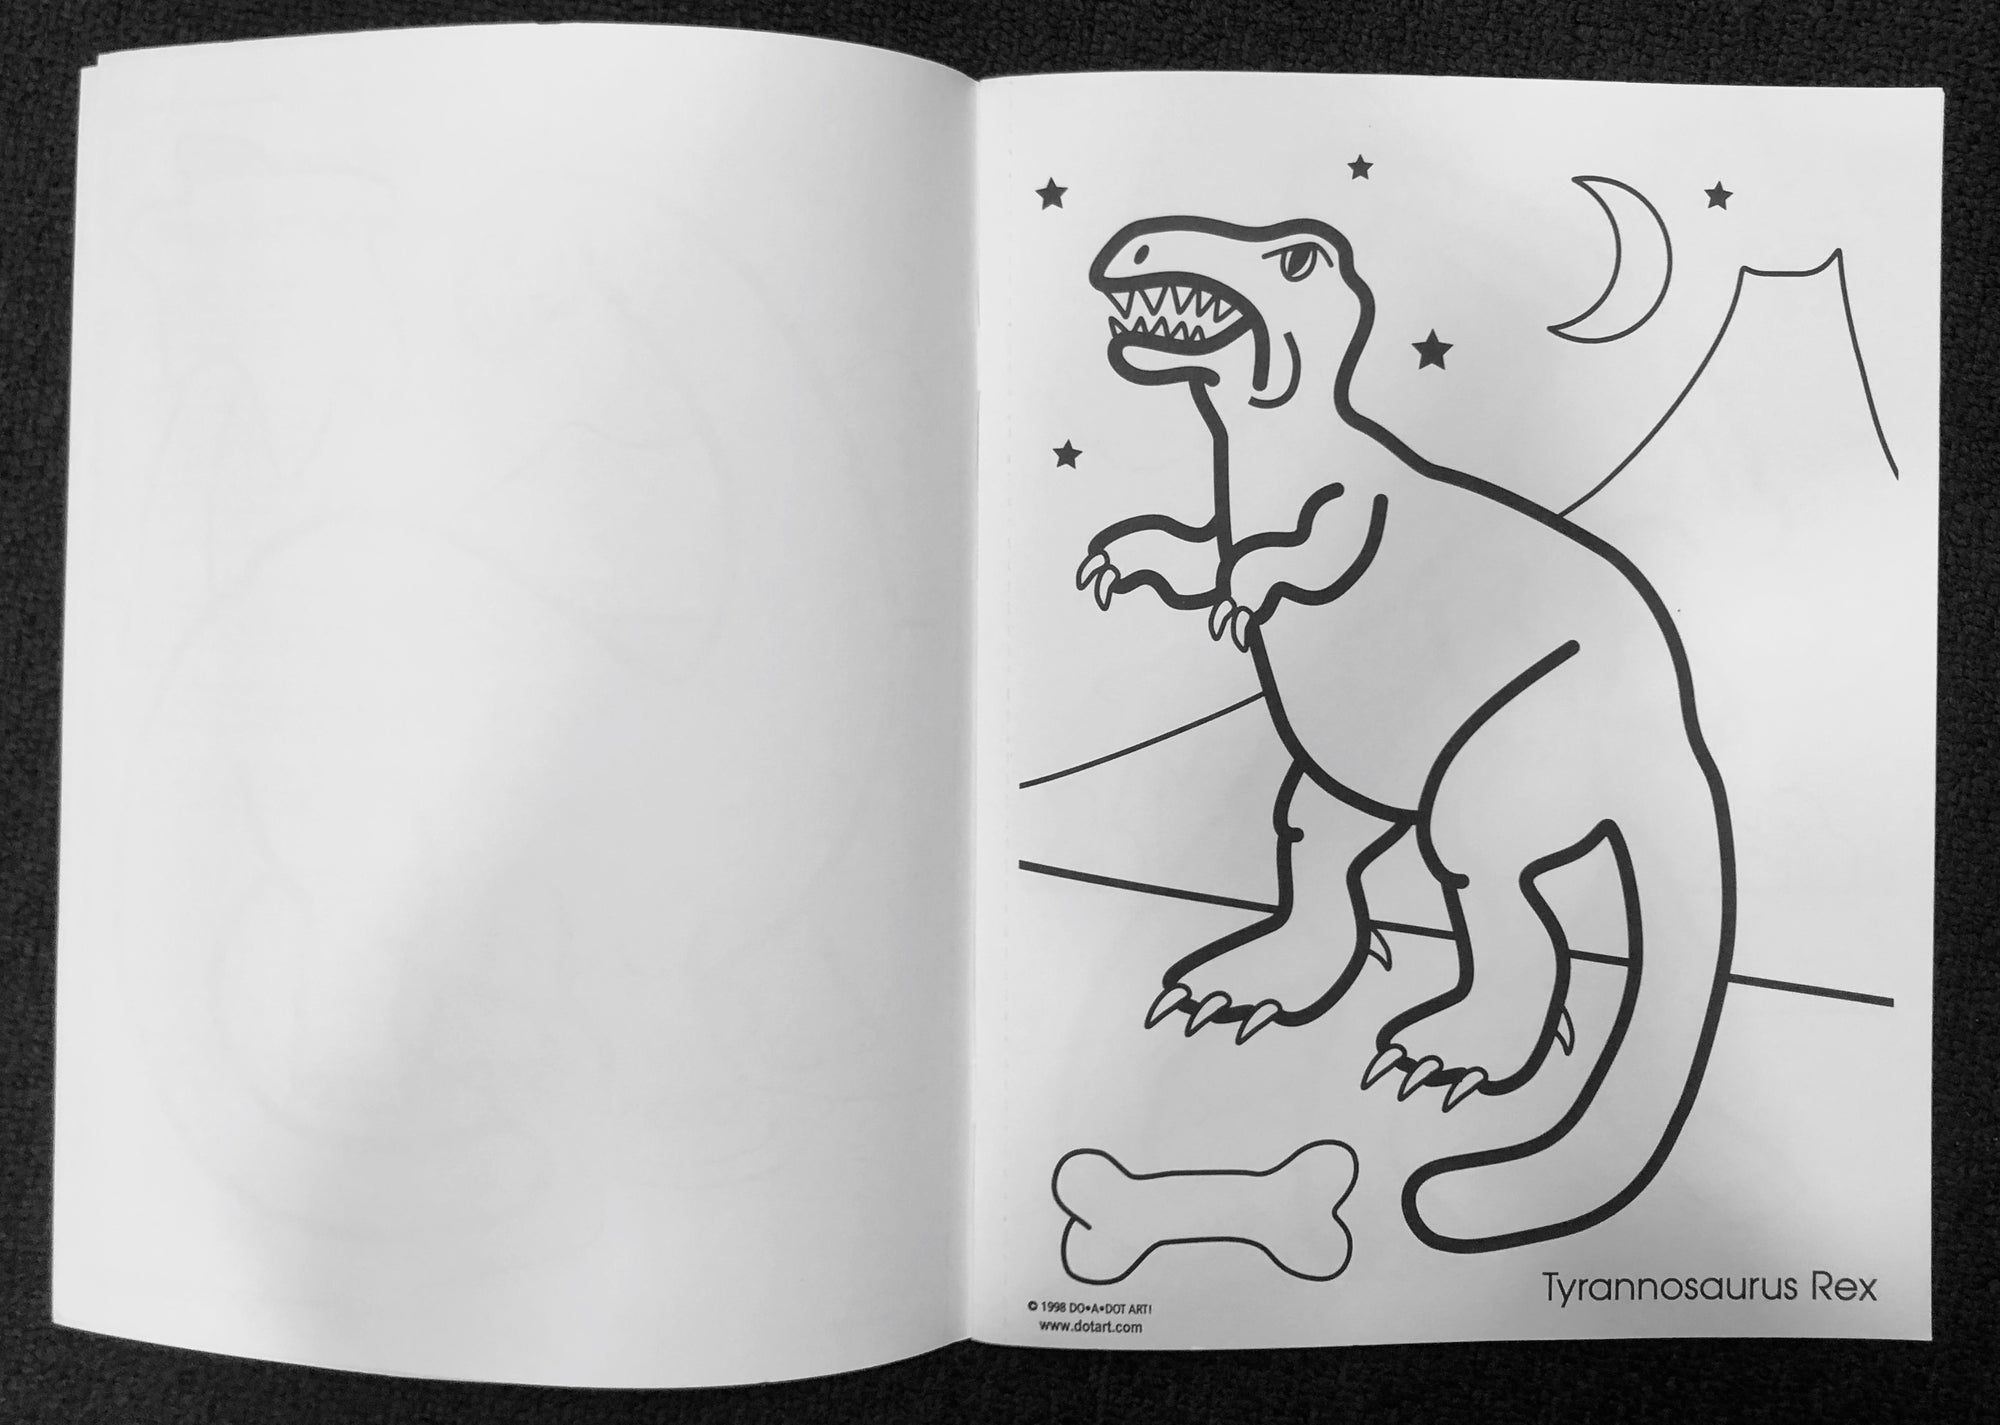 Do-A-Dot Art Creative Activity Book: Dinosaurs